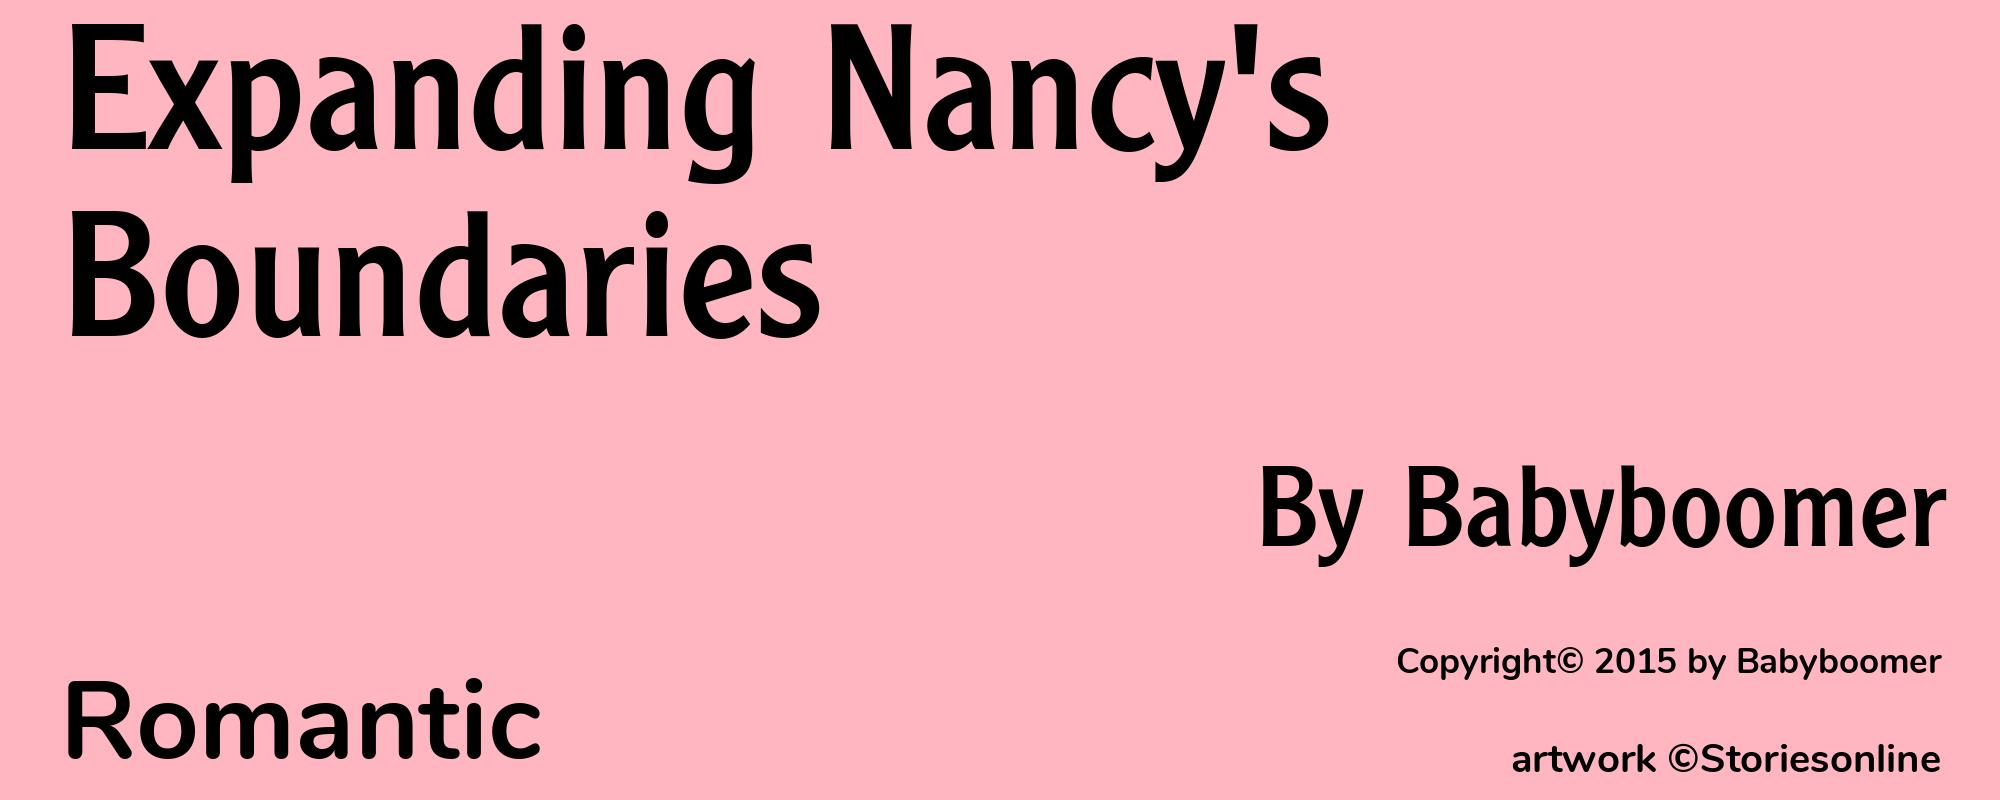 Expanding Nancy's Boundaries - Cover